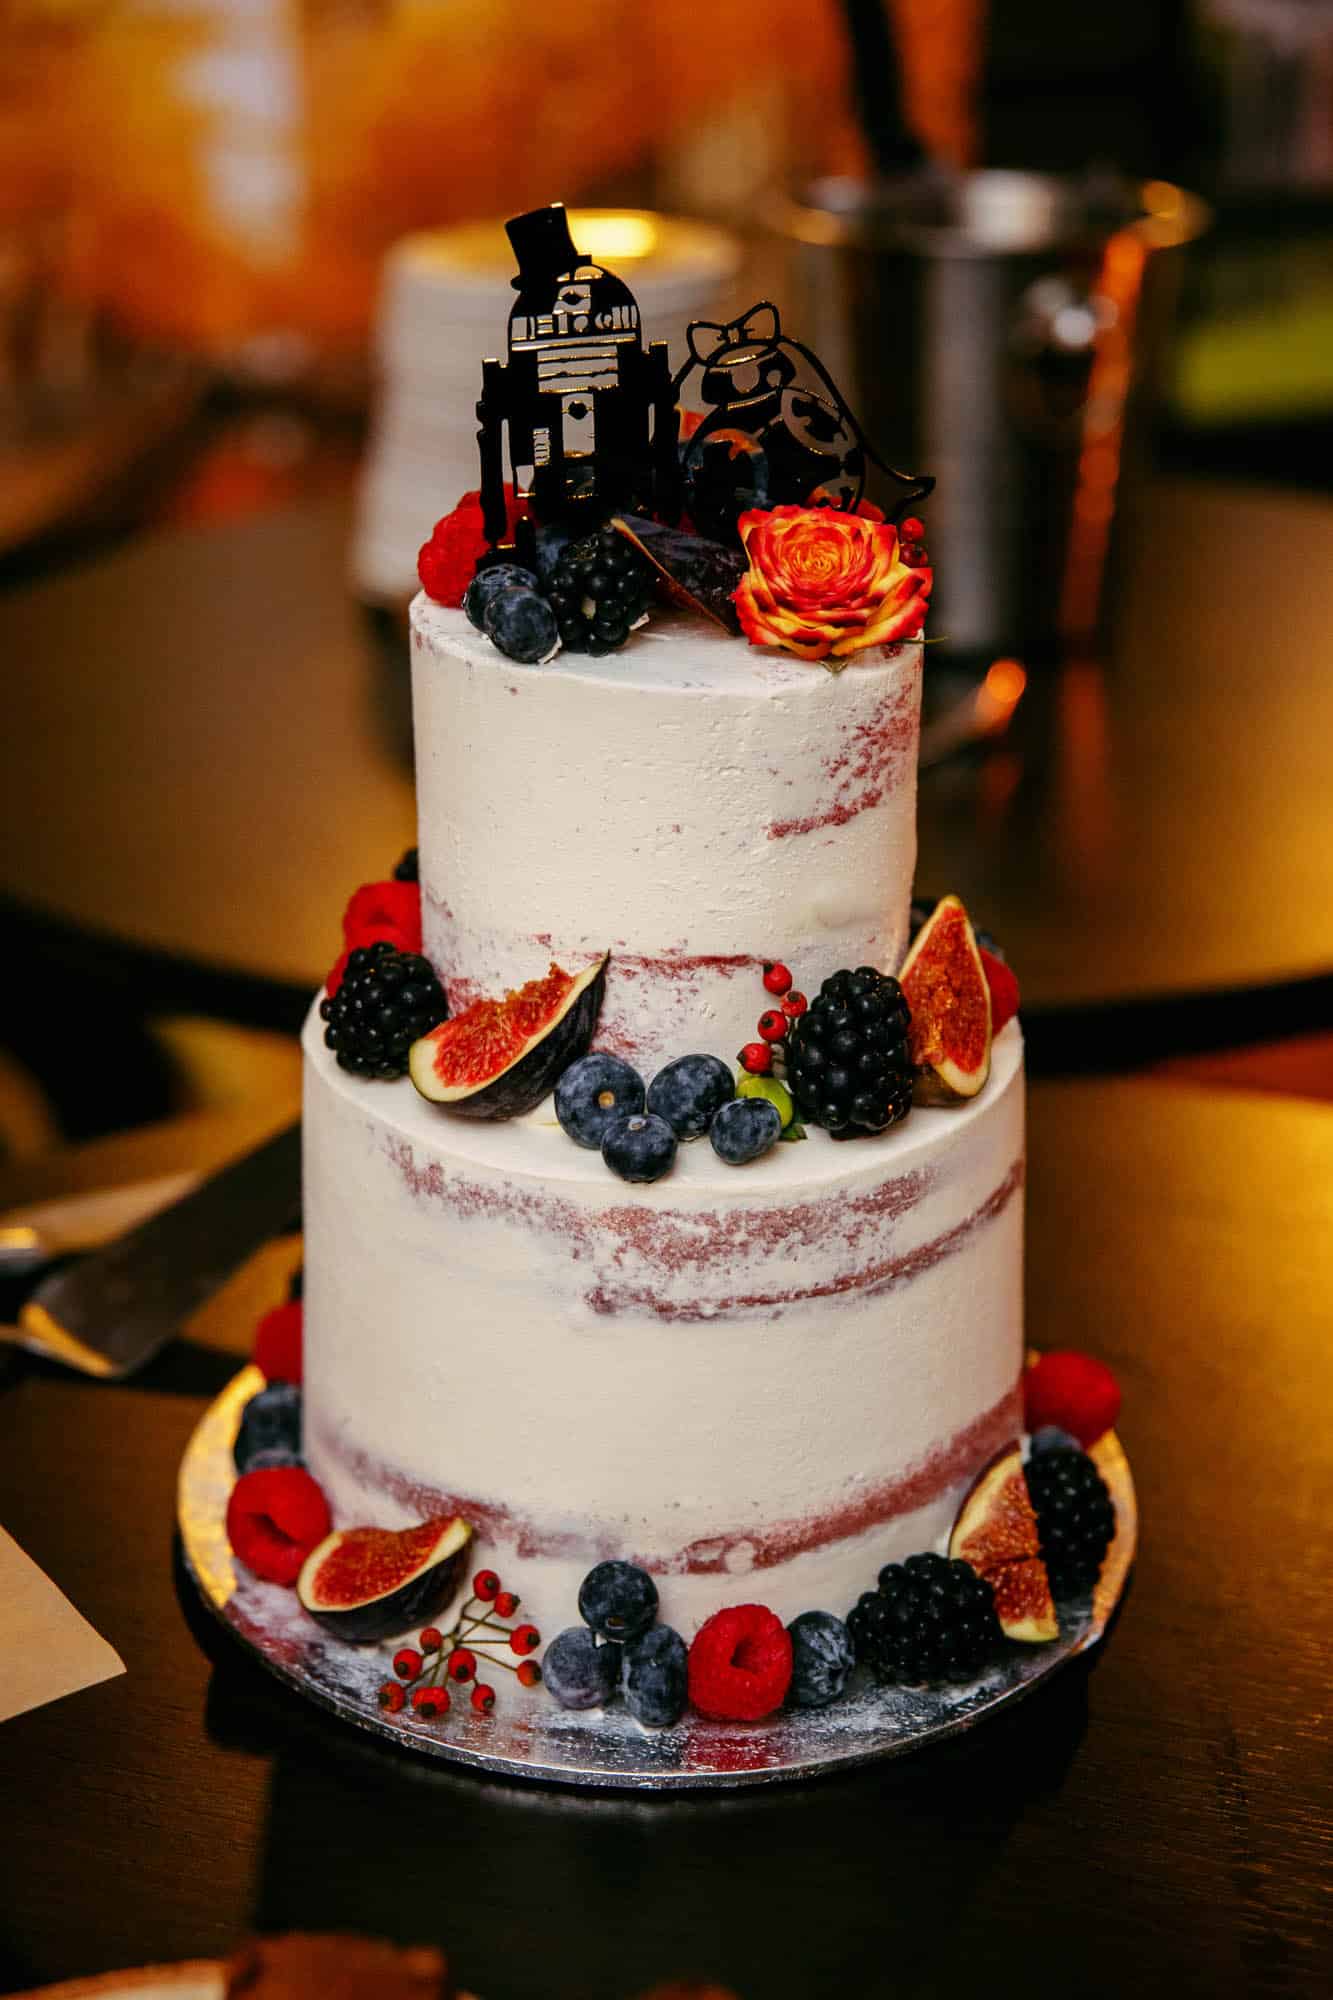 Starwars wedding cake